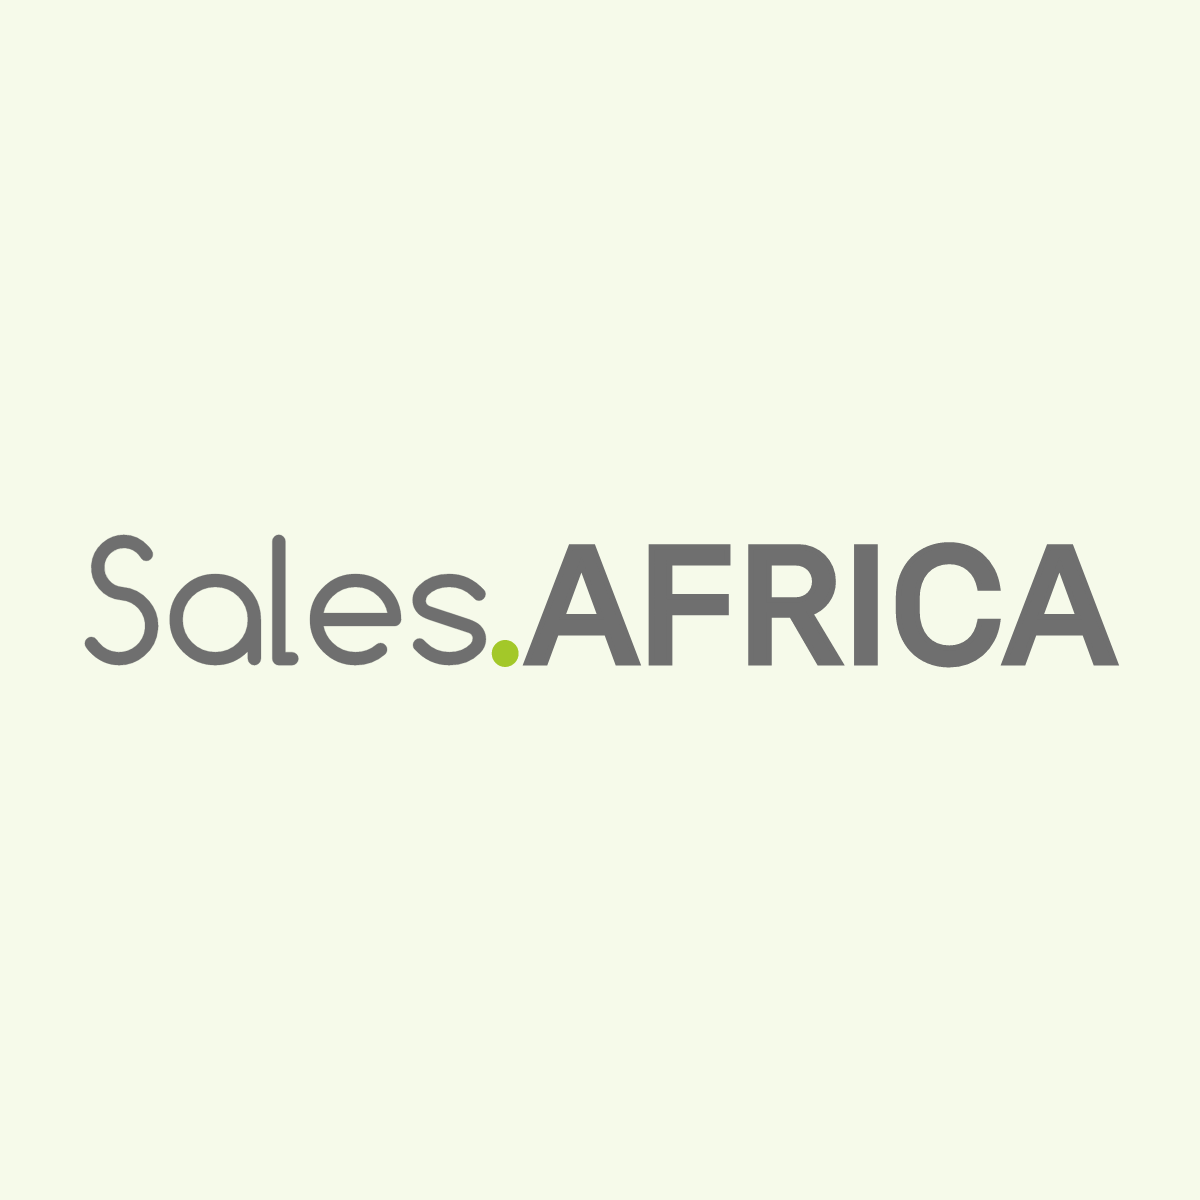 Sales.Africa